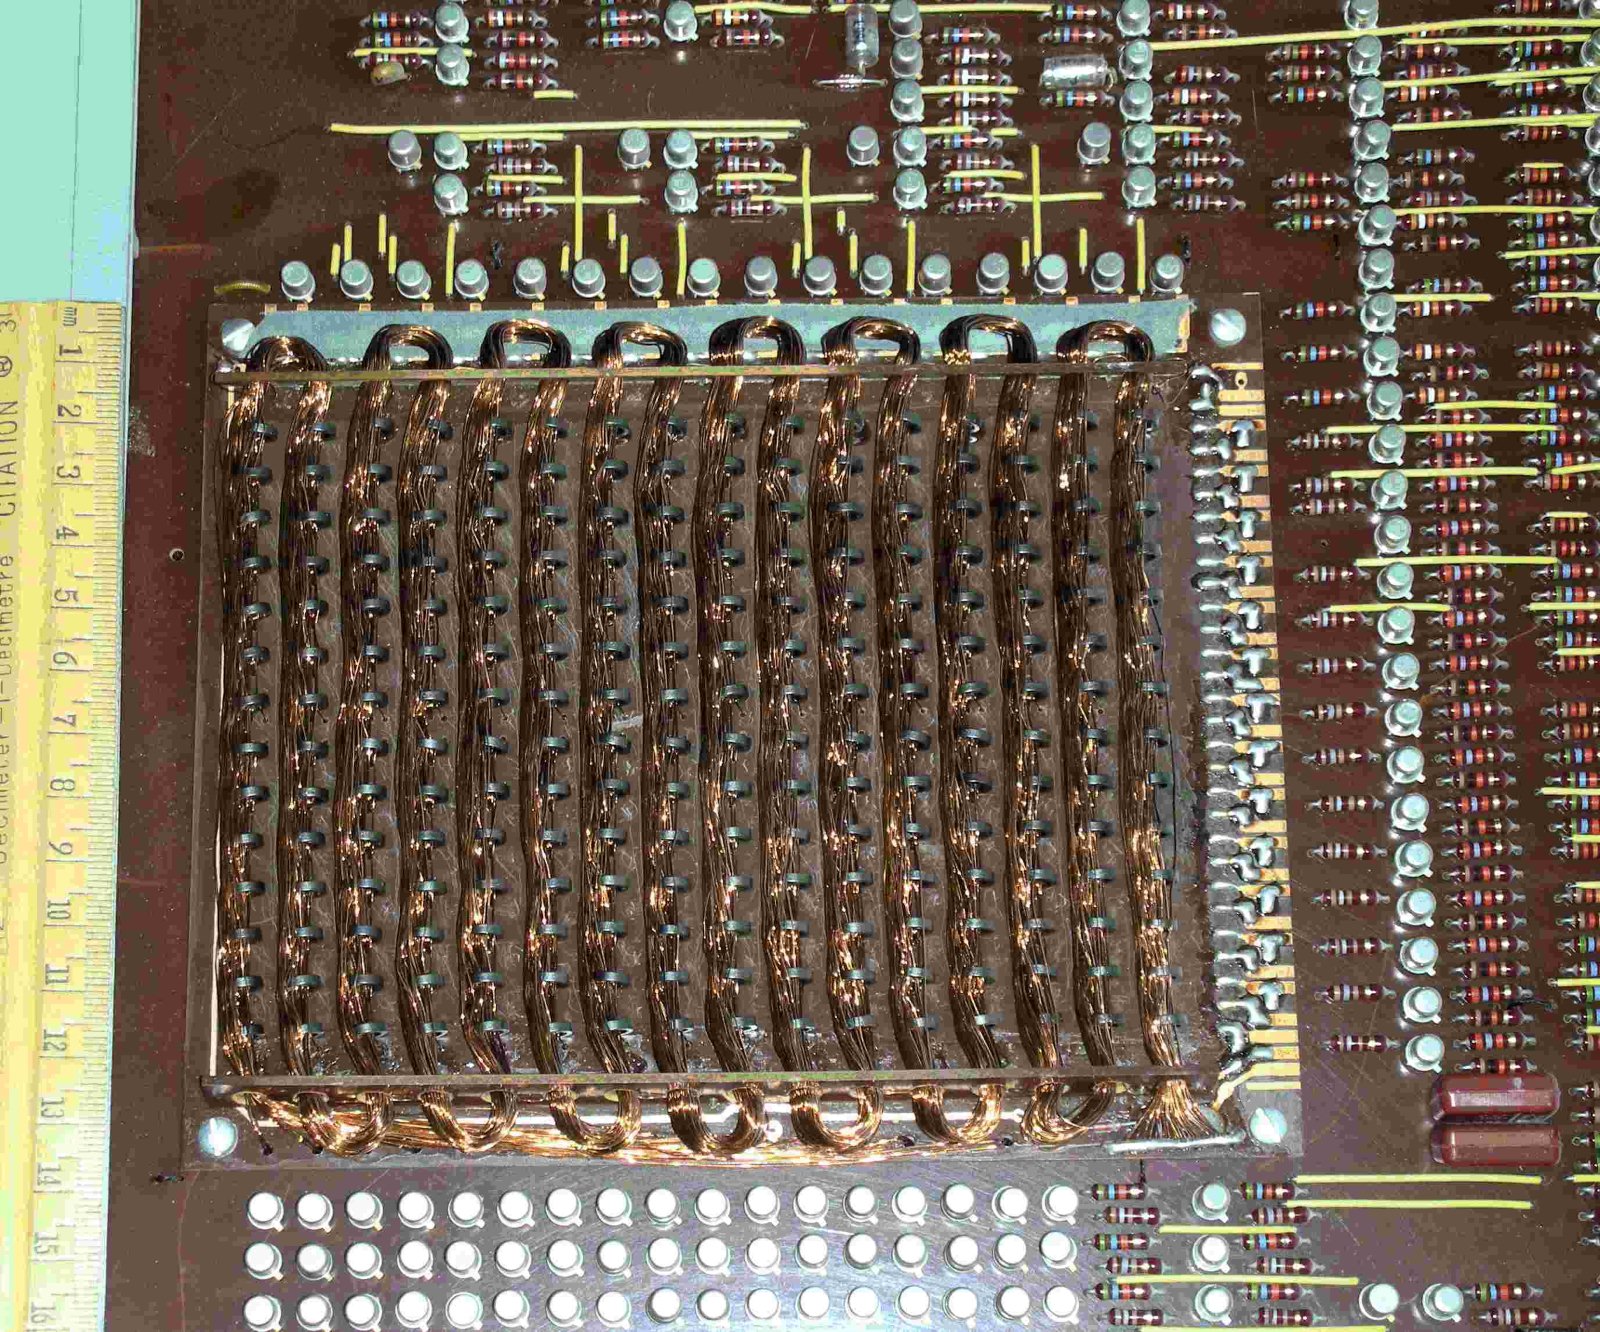 cores: 16 x 14 bit registers on a CPU